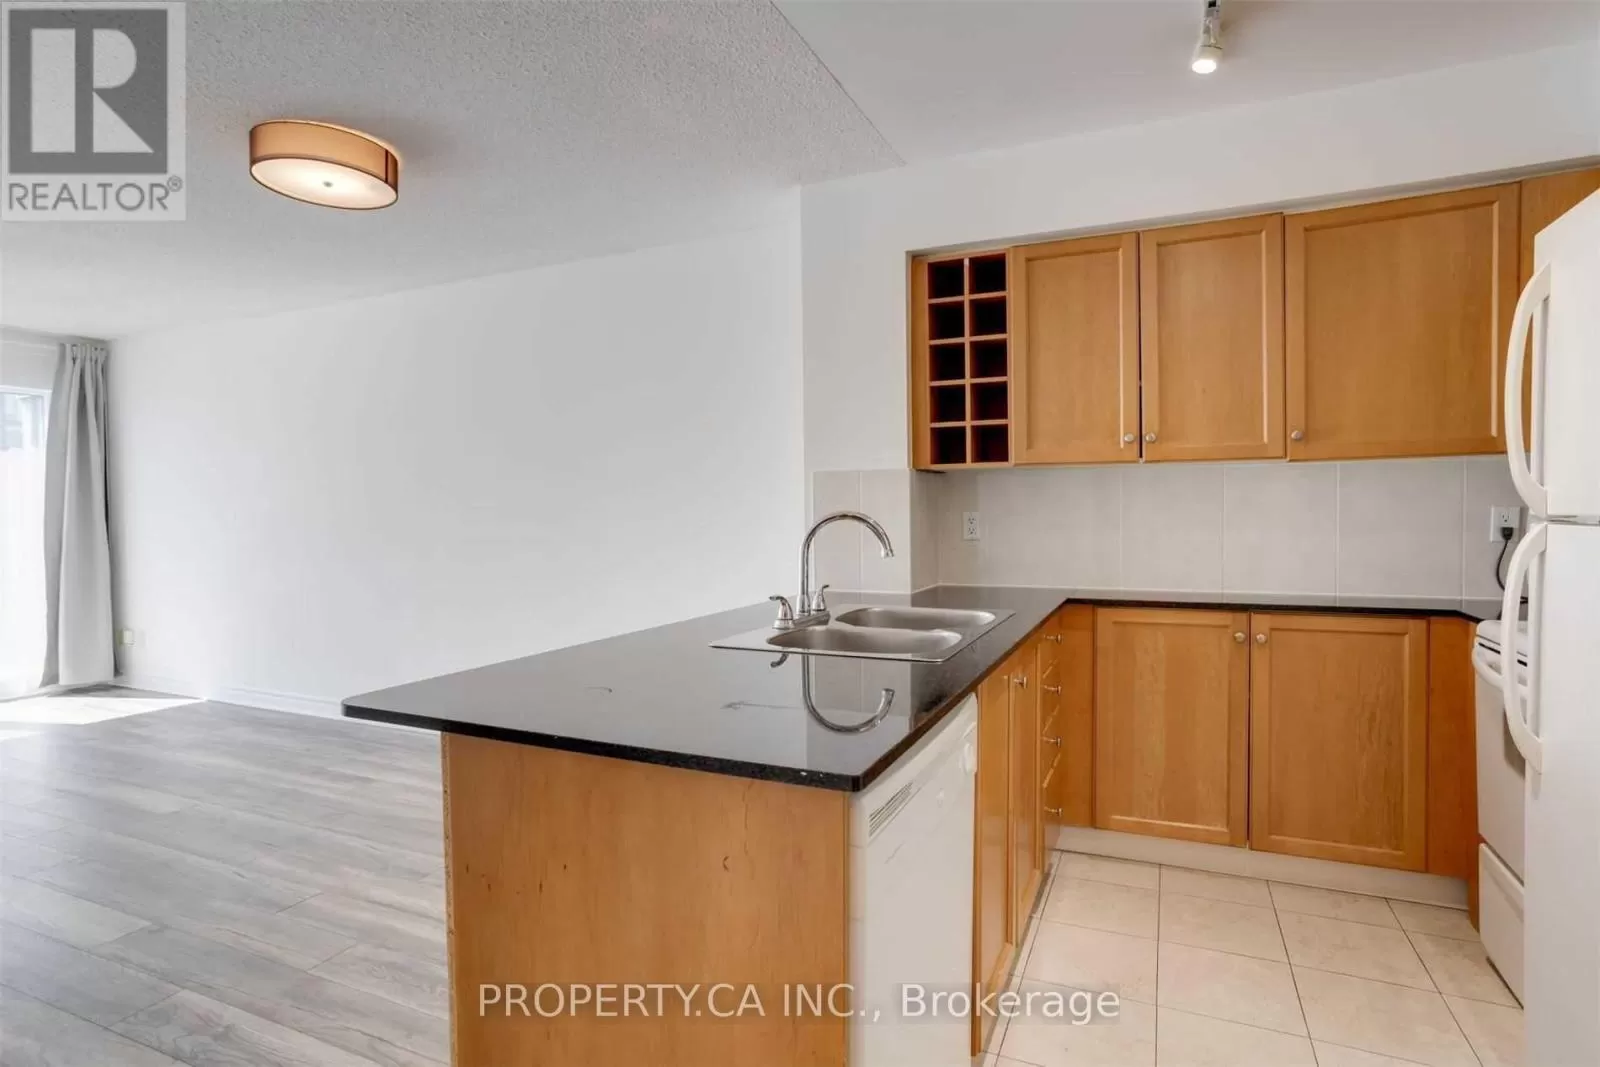 Apartment for rent: 3605 - 210 Victoria Street, Toronto, Ontario M5B 2R3